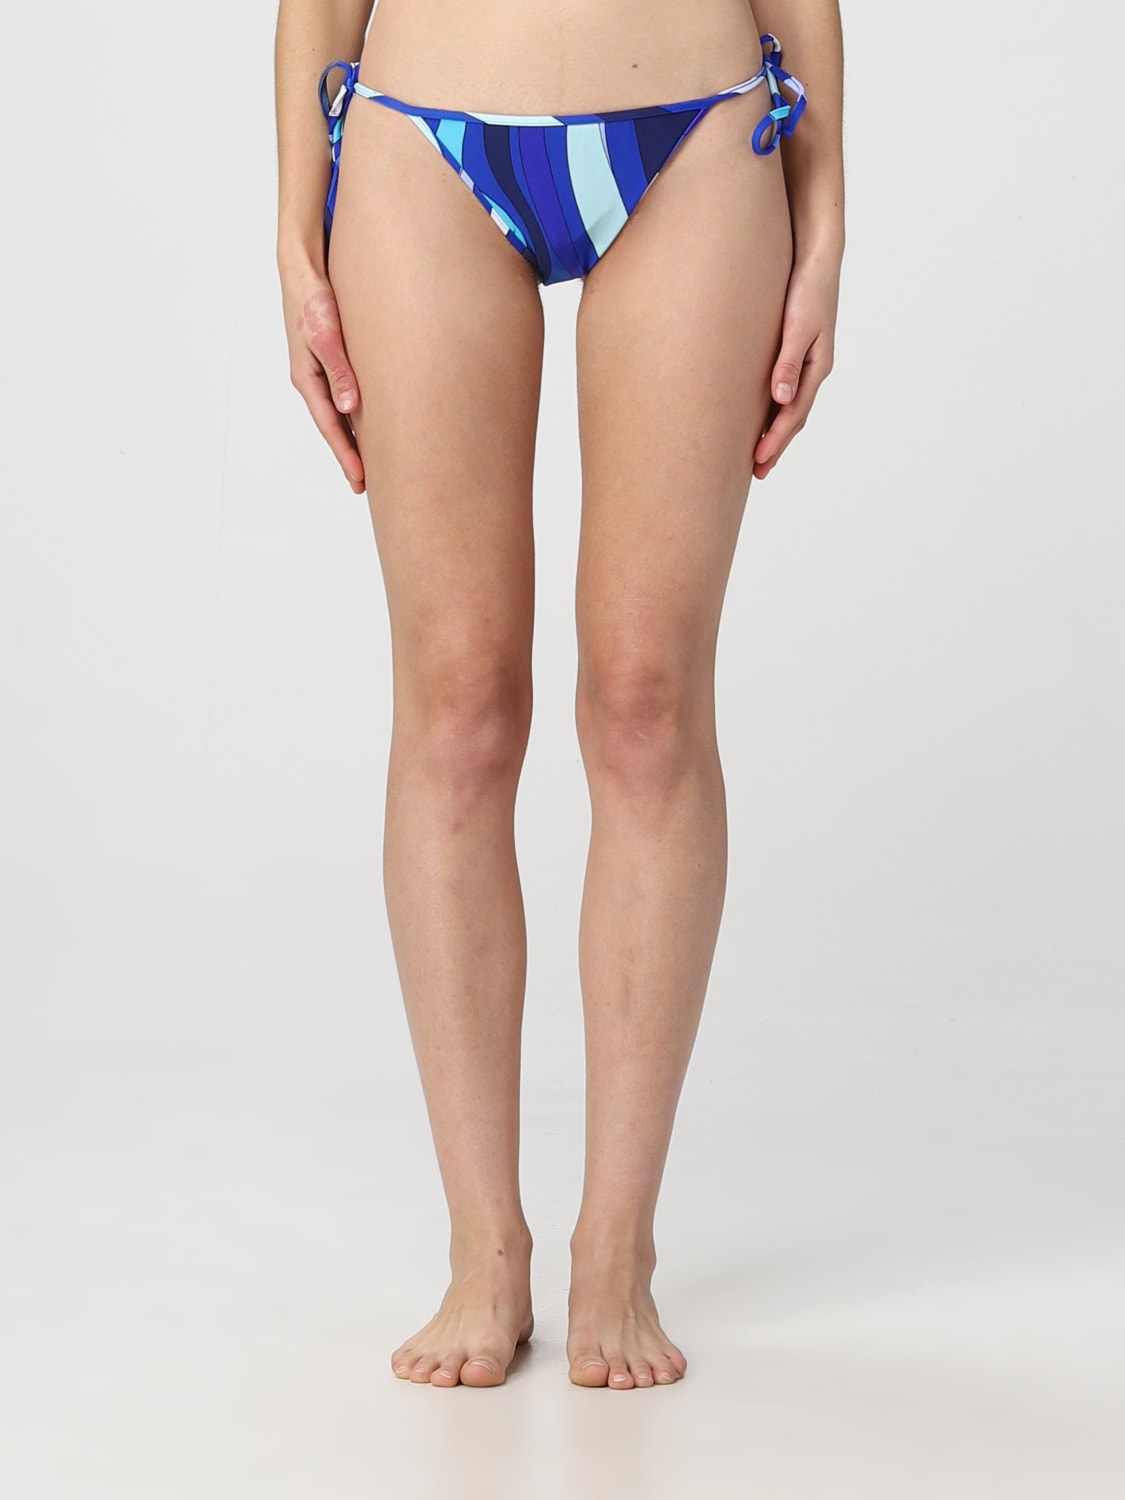 Emilio Pucci bikini bottoms in printed lycra